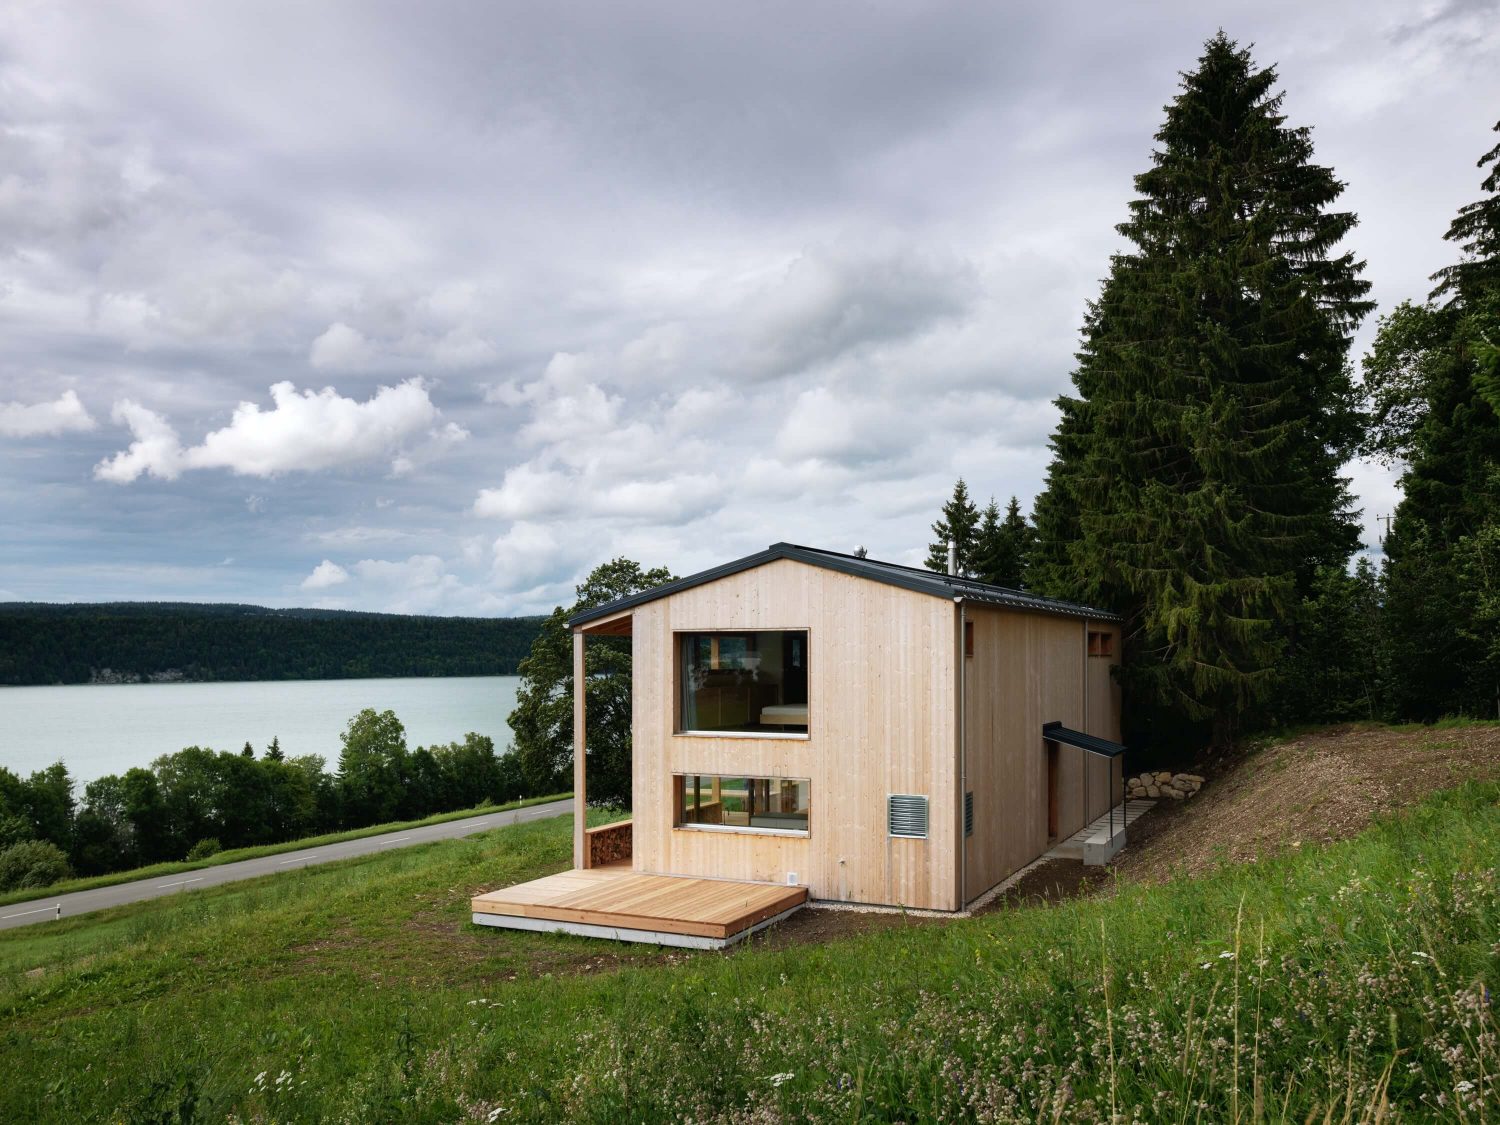 House MW by Ralph Germann architectes